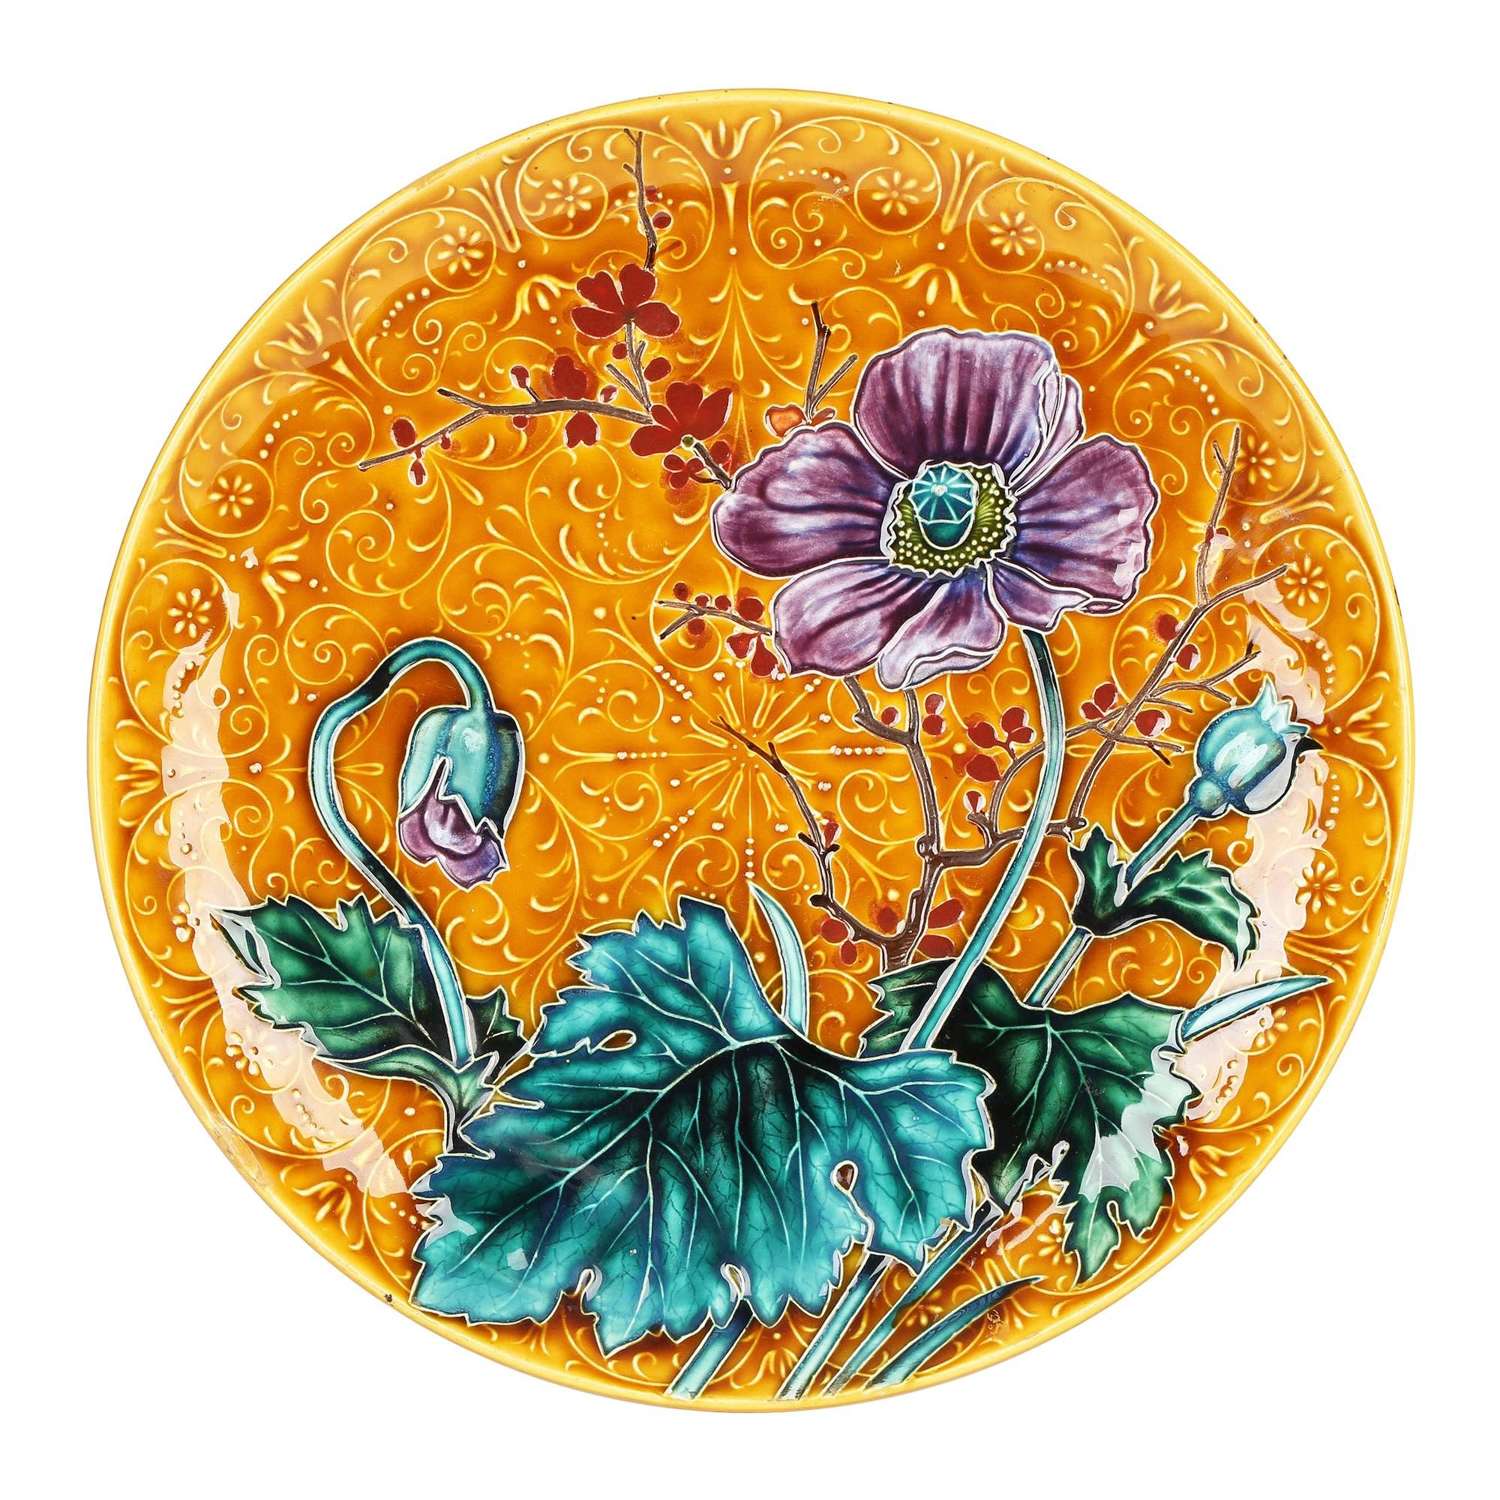 Austrian Art Nouveau Pottery Wall Plaque with Tubelined Floral Designs